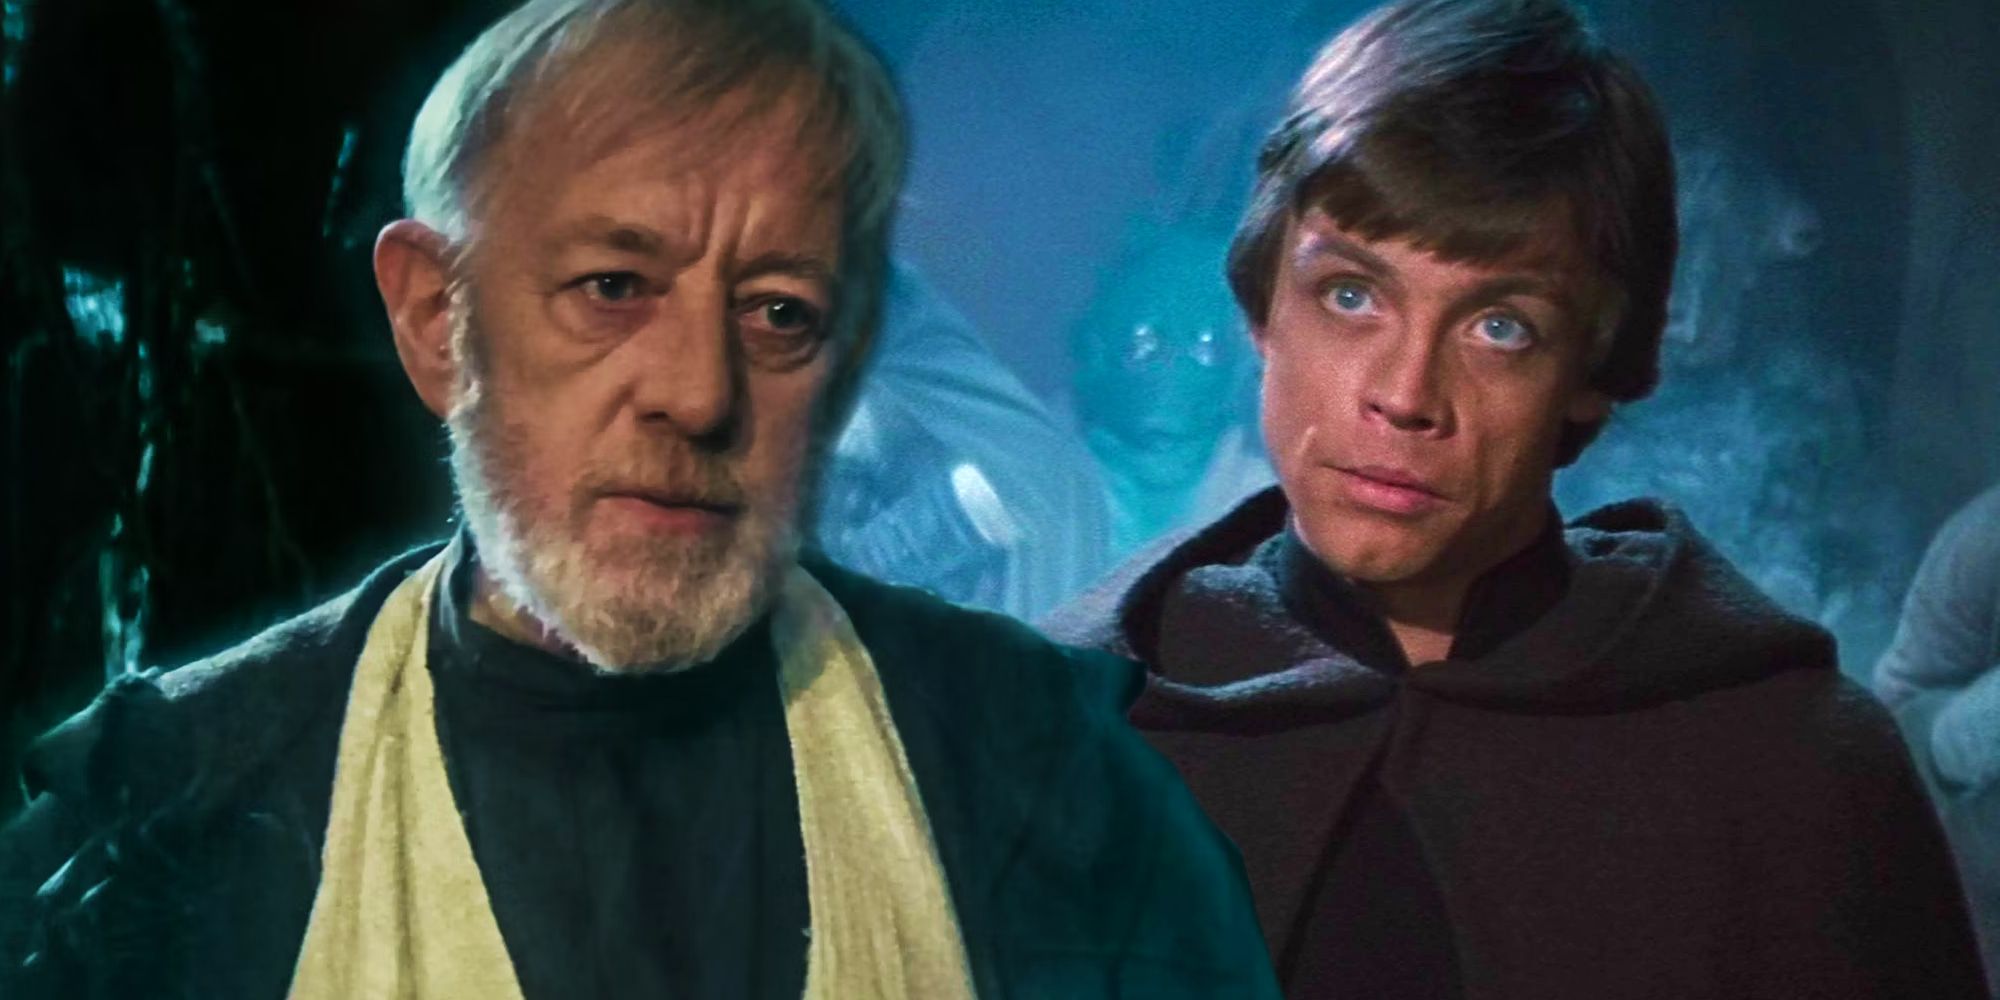 Obi-Wan Kenobi and Luke Skywalker as seen in Return of the Jedi